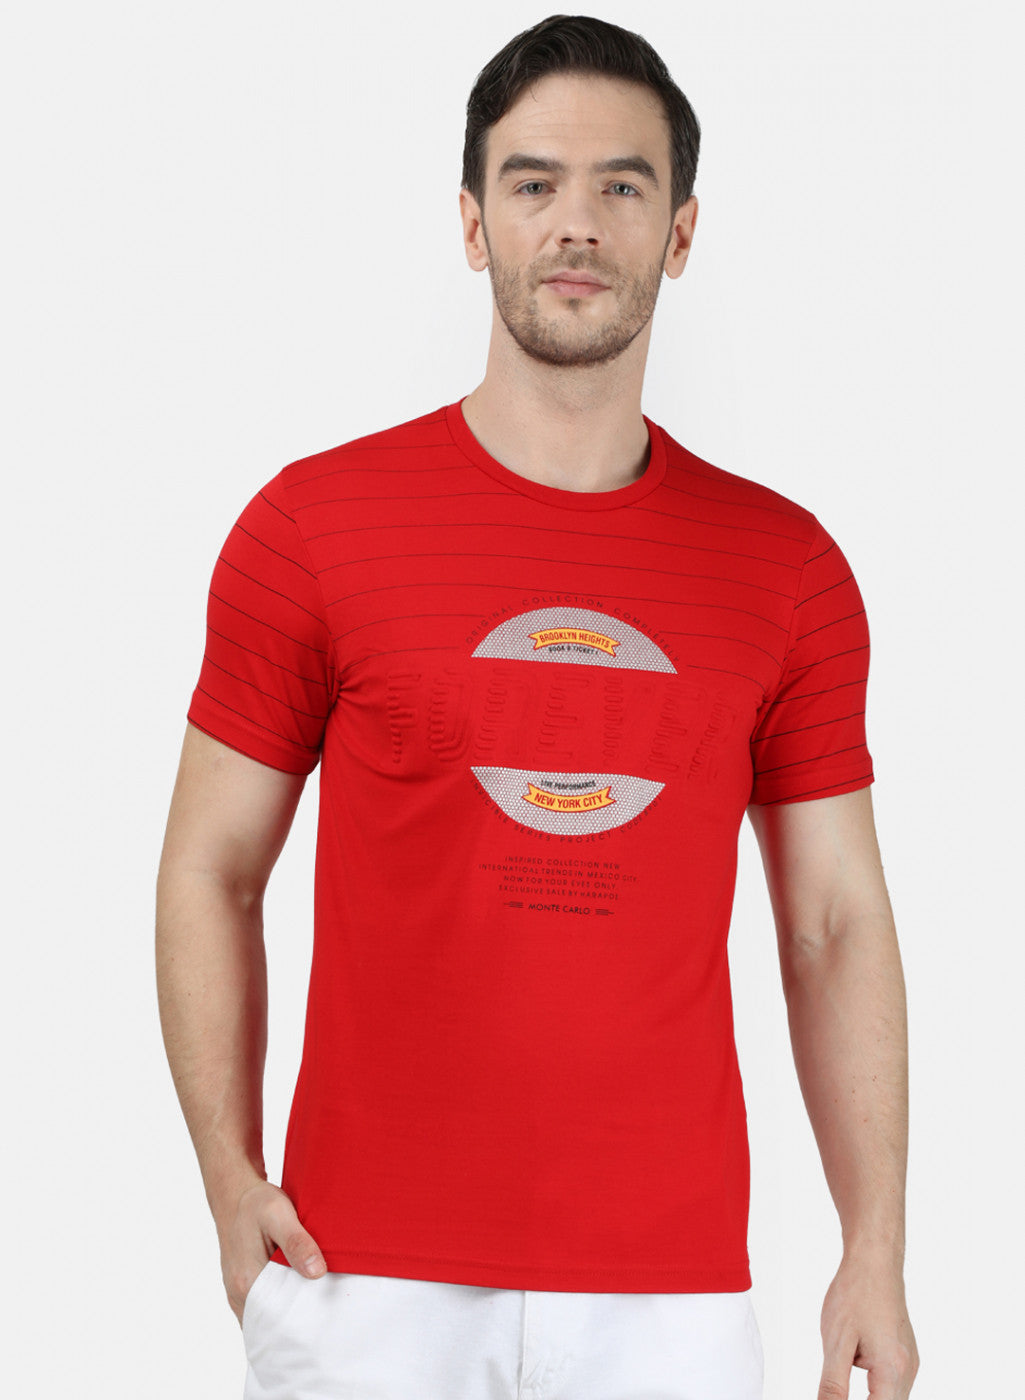 Mens Red Printed T-Shirt